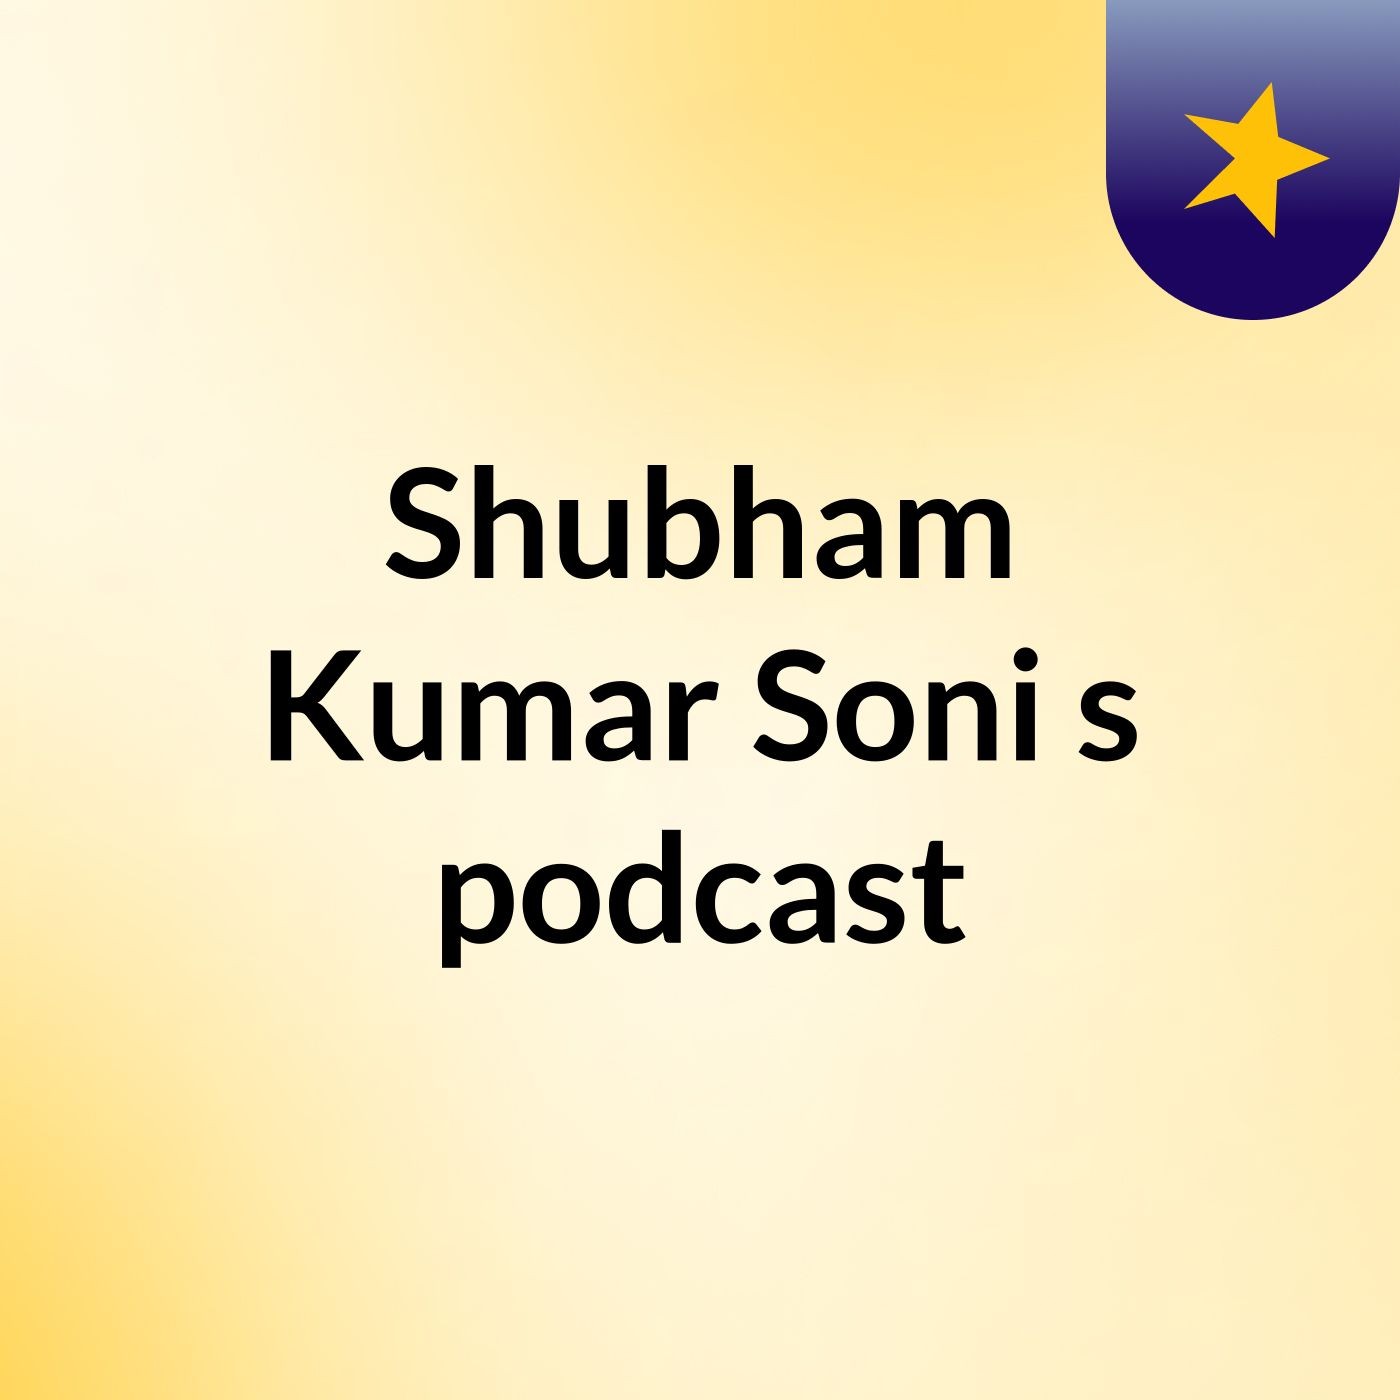 Episode 2 - Shubham Kumar Soni's podcast